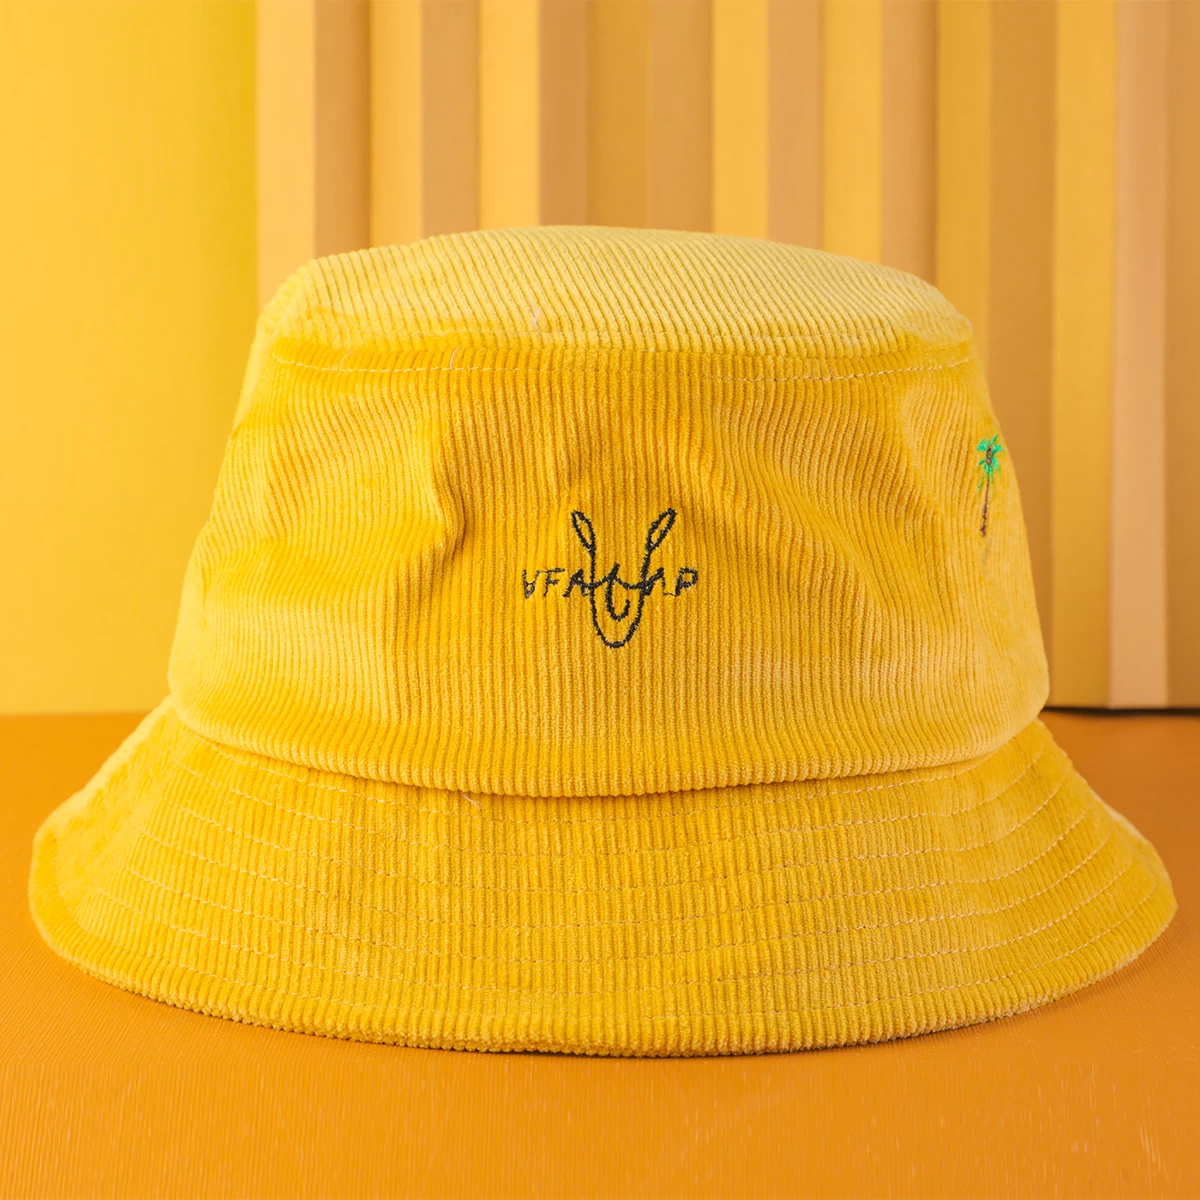 China borduurwerk vfa logo gele corduroy emmer hoeden op maat fabrikant